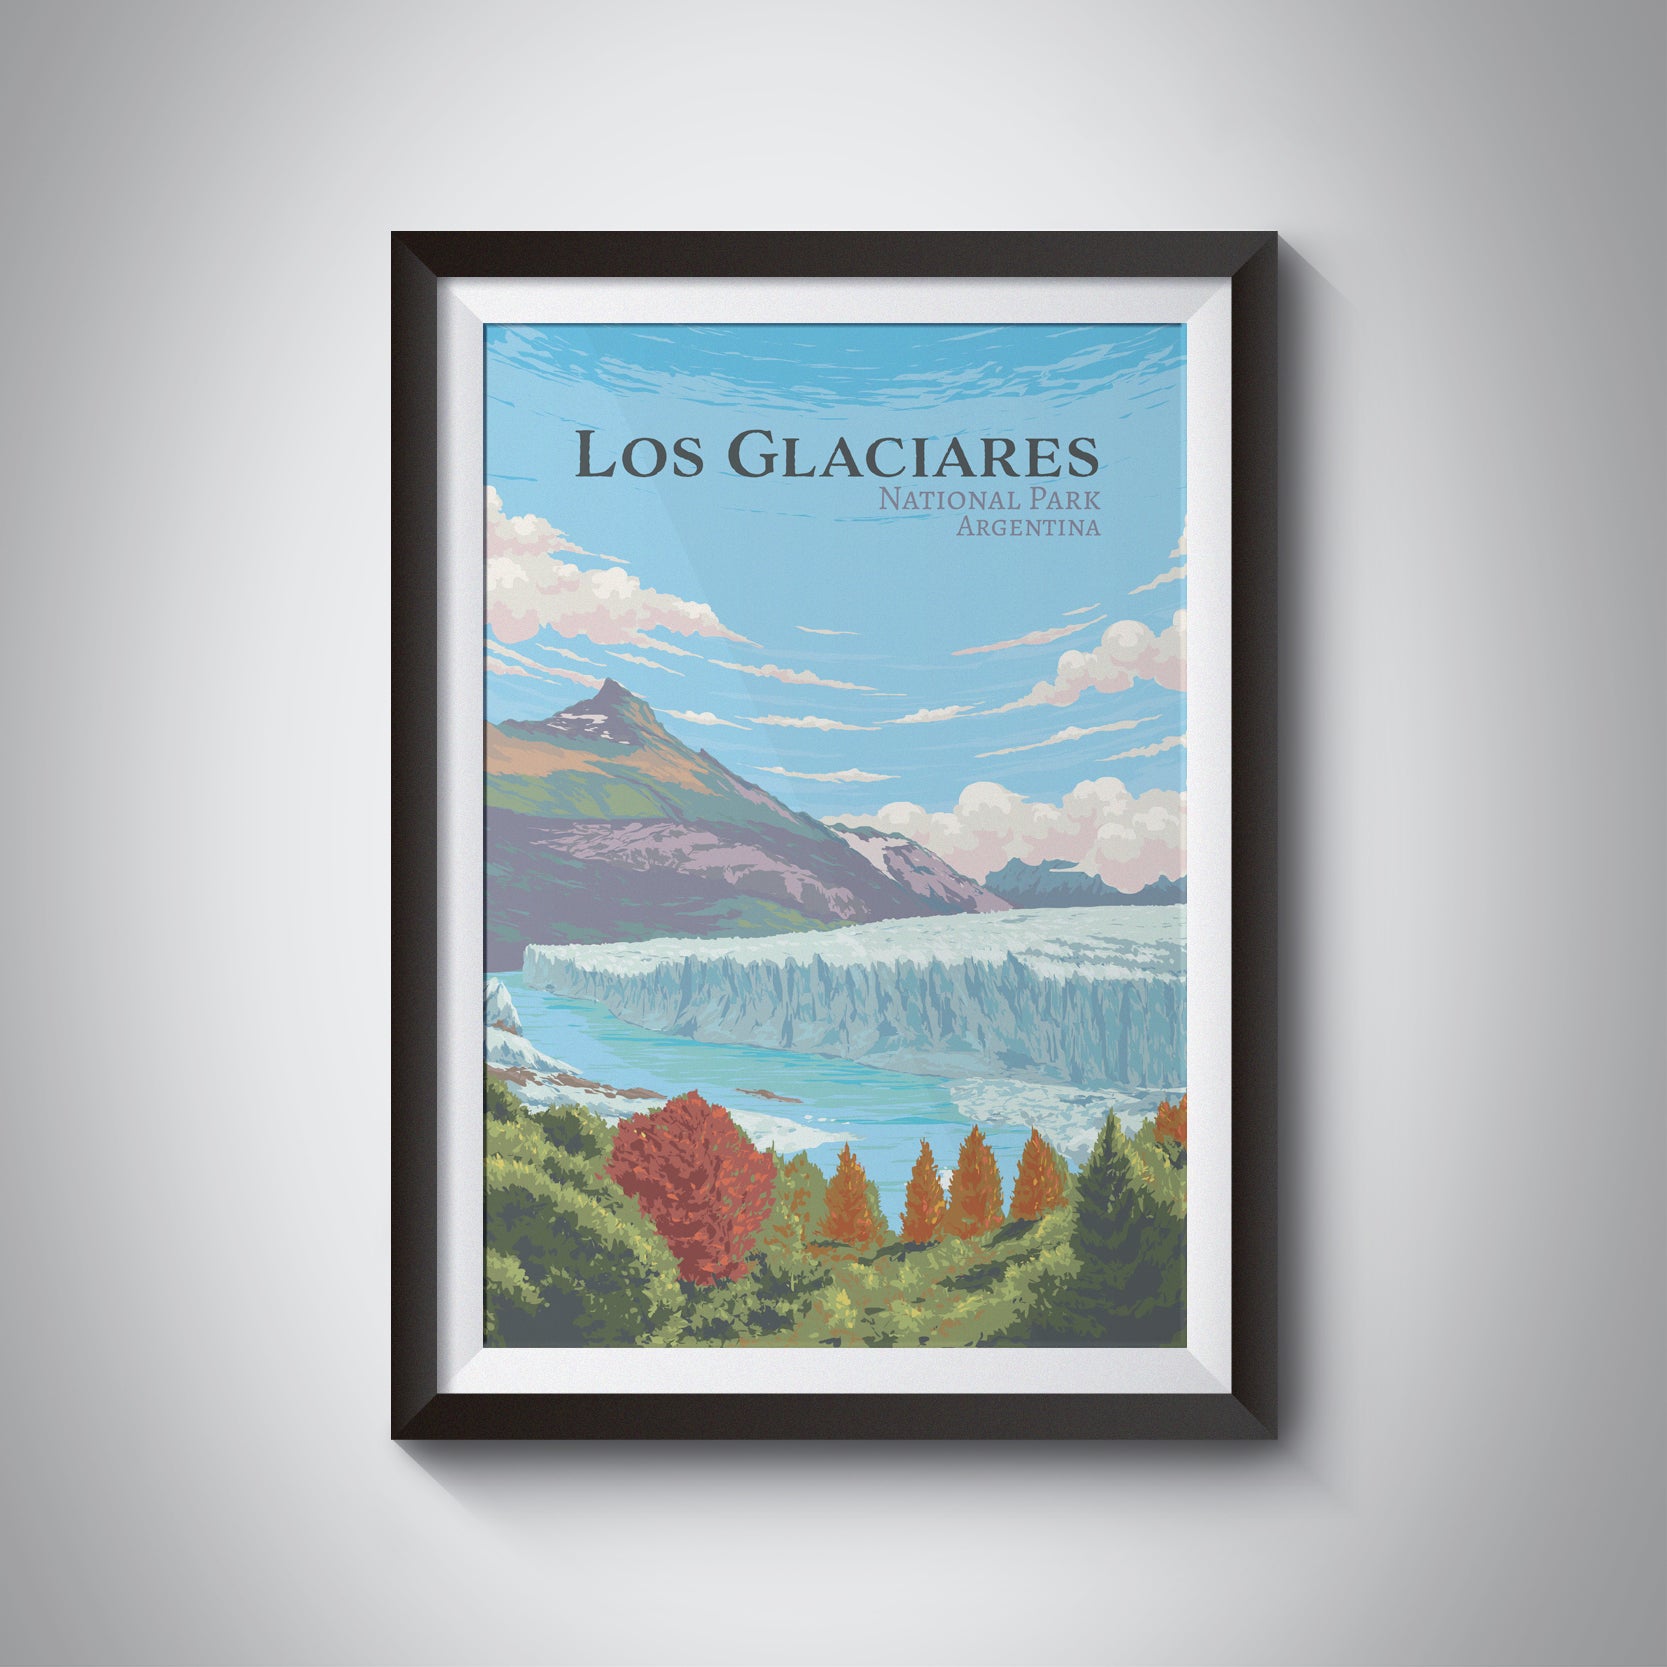 Los Glaciares National Park Travel Poster